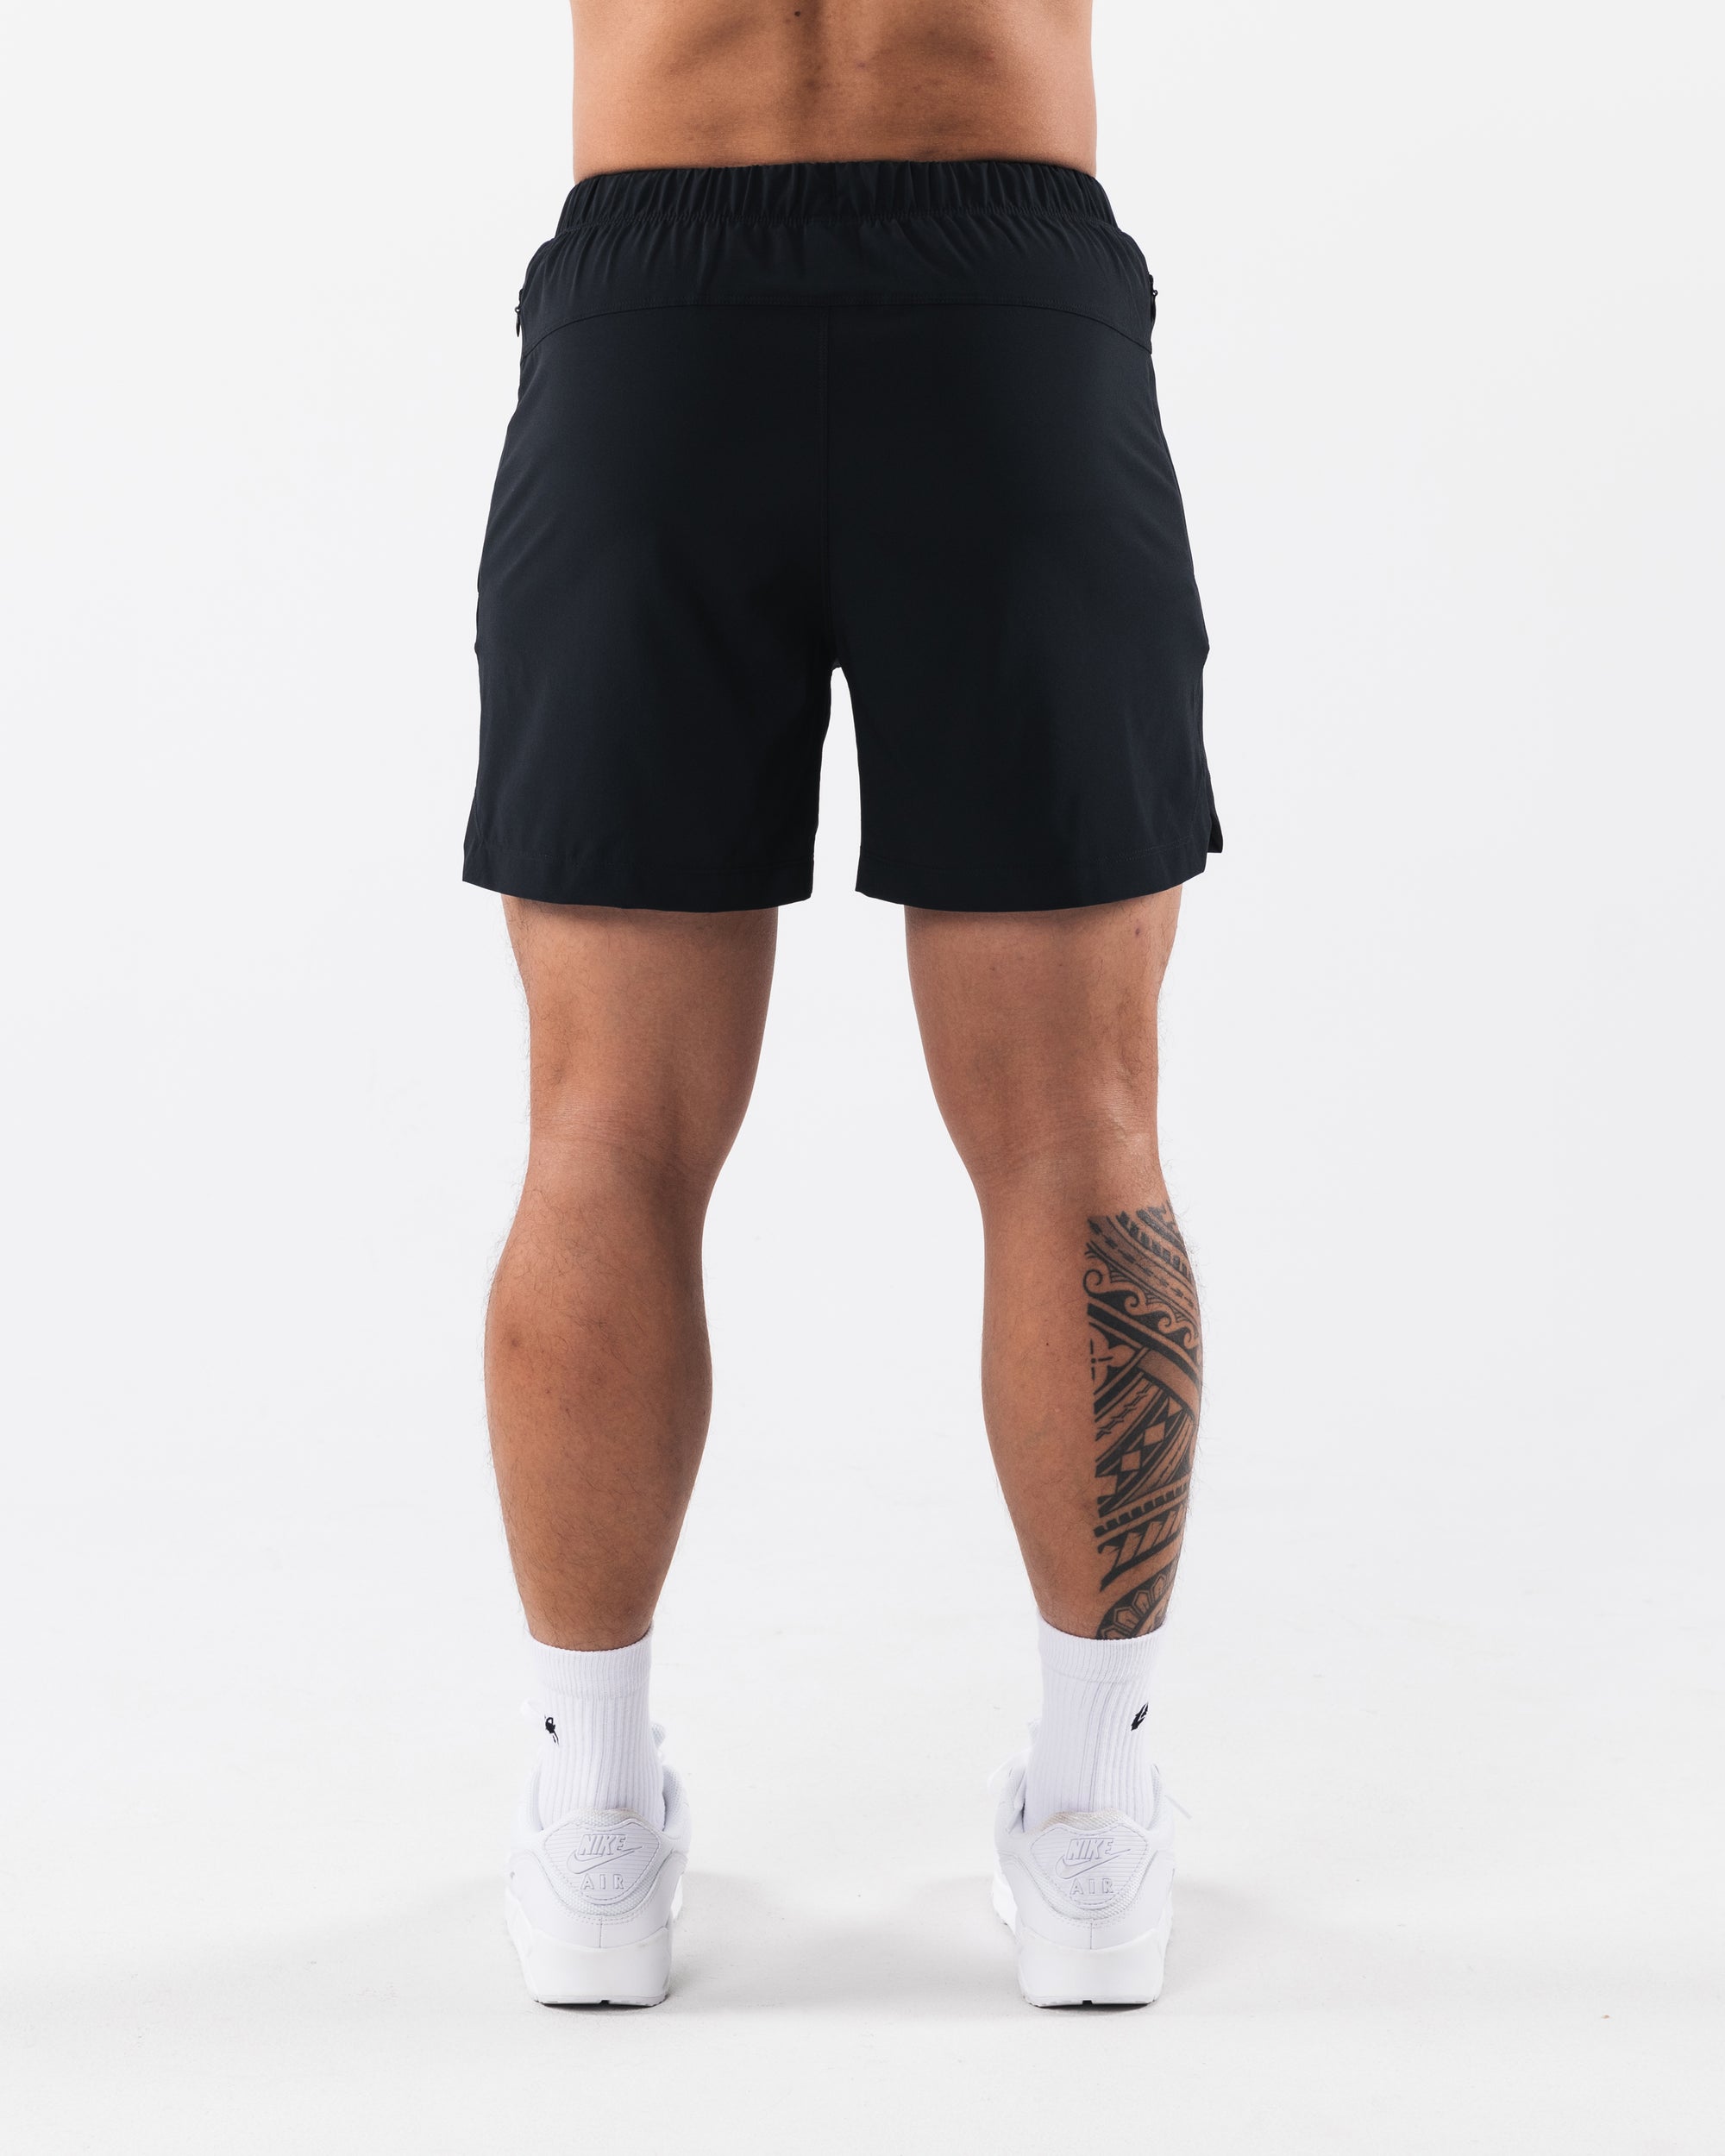 Alphalete Premium Shorts Size small Black